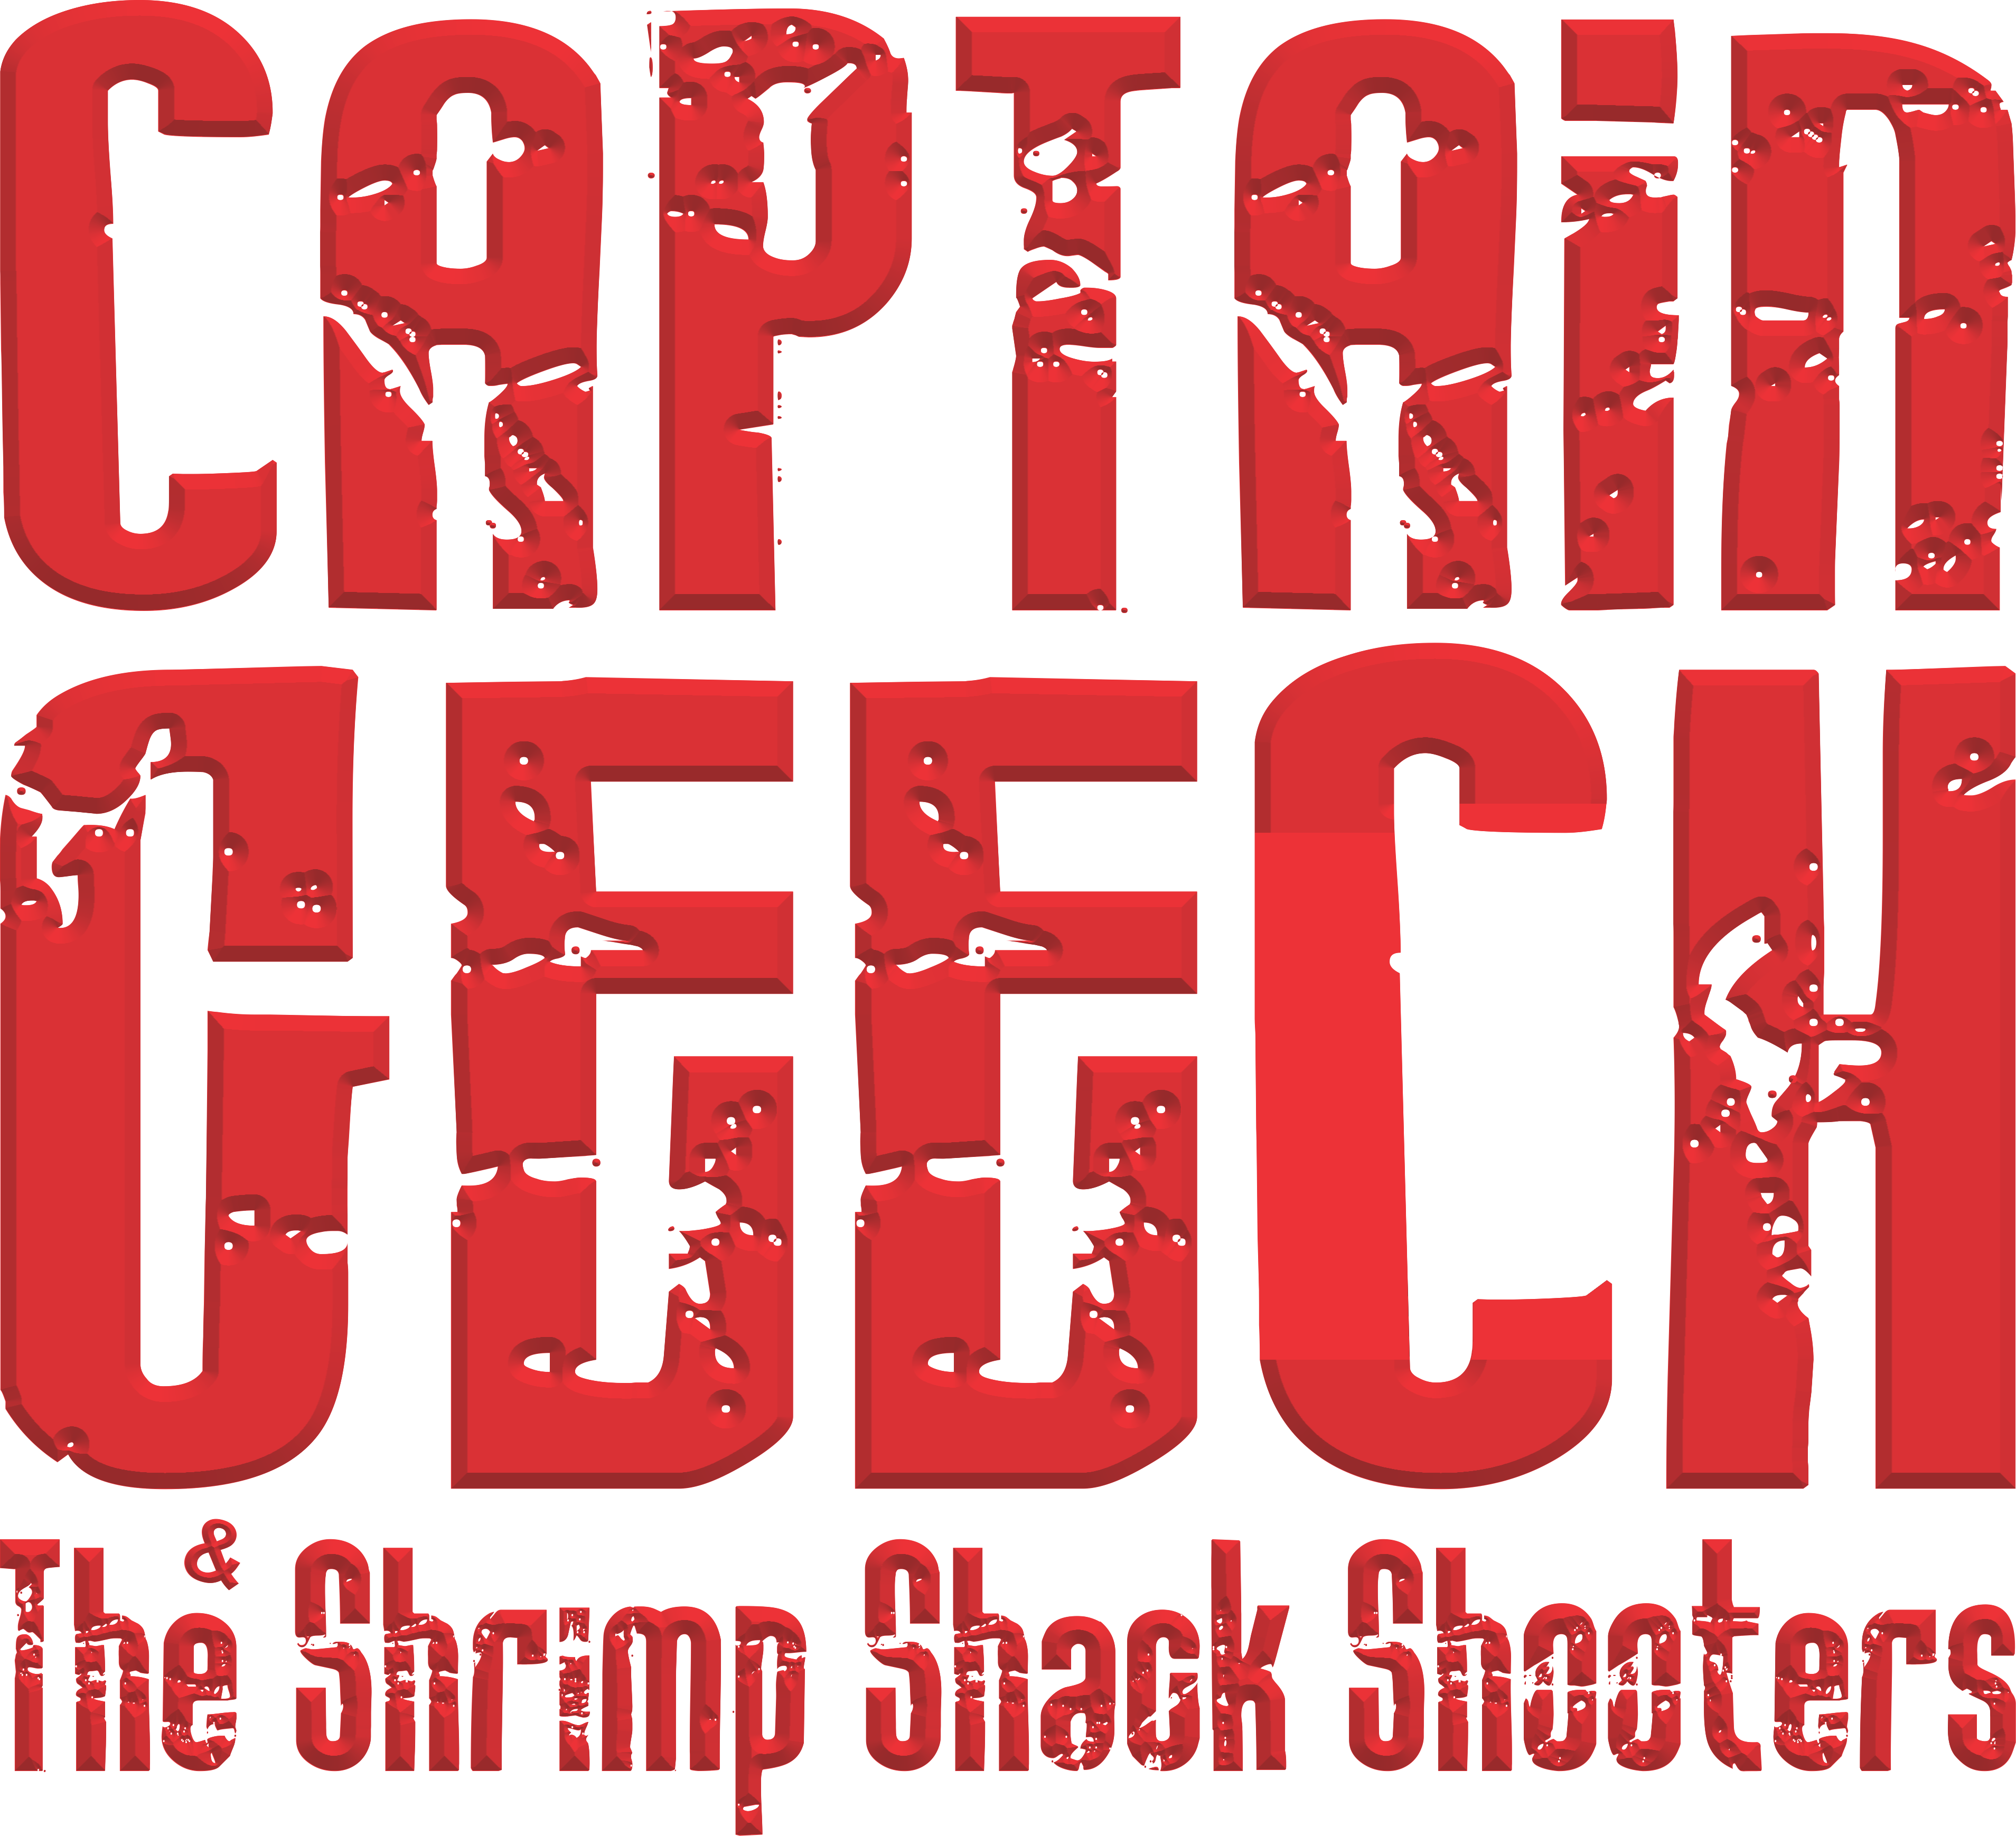 captain-geech-posters-logo-s